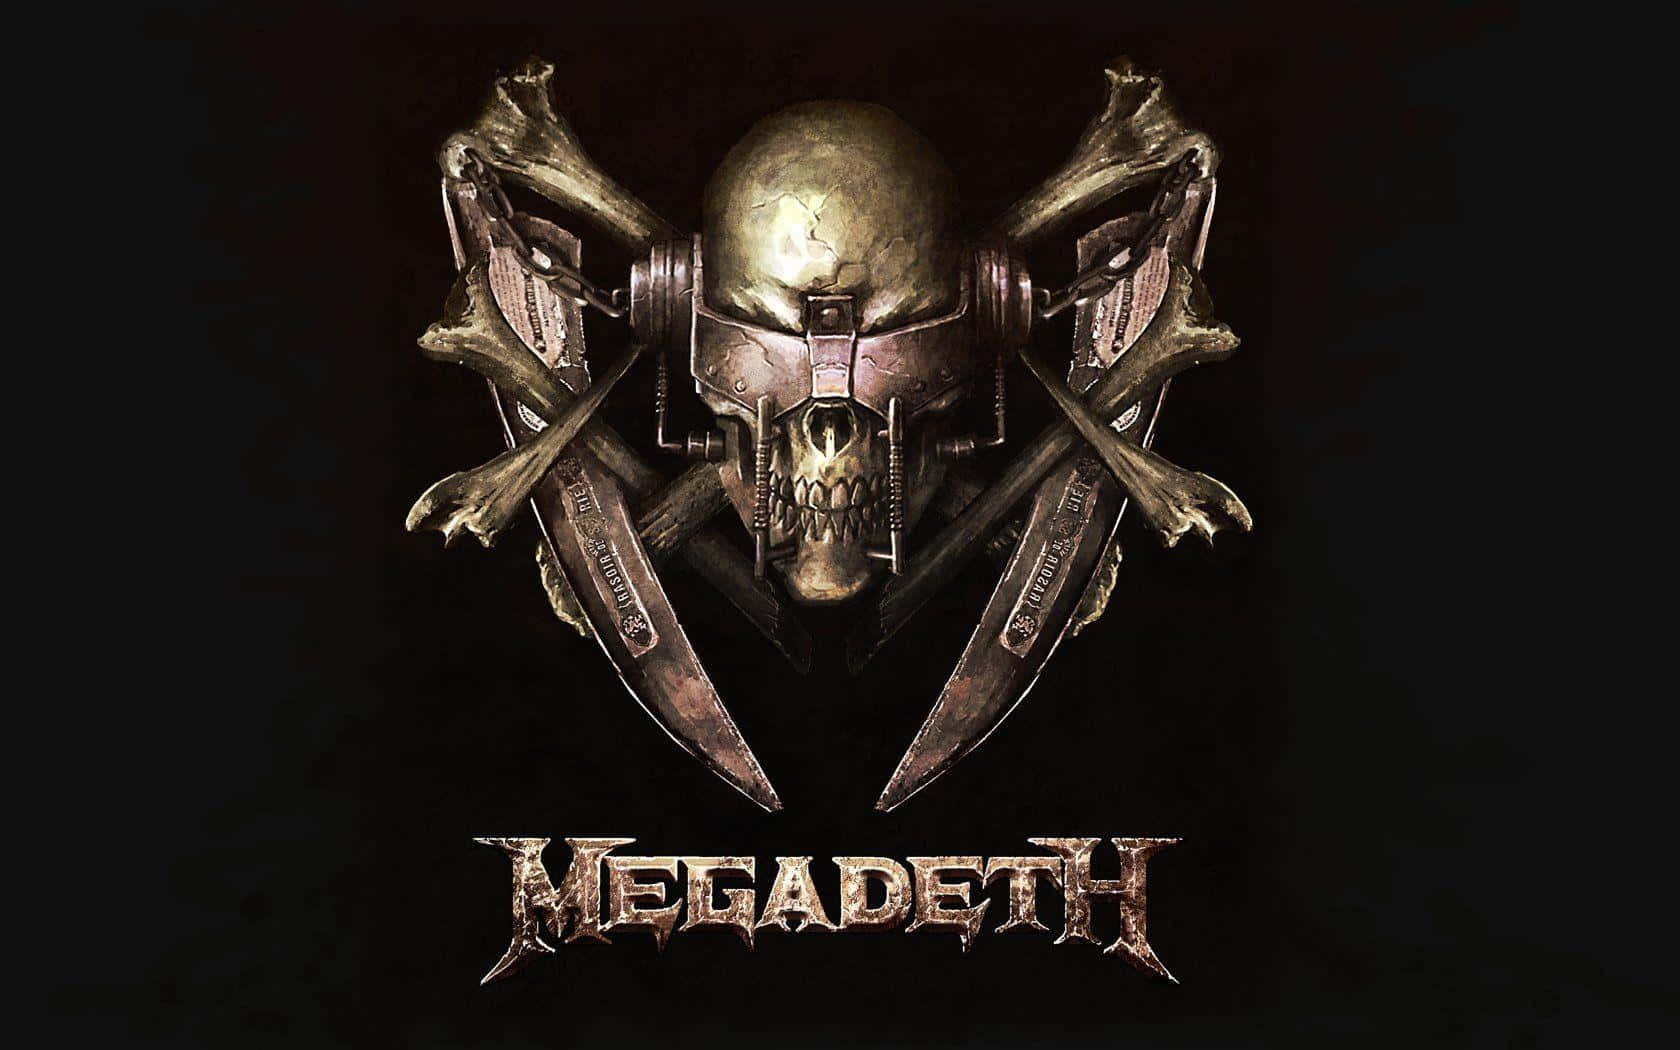 Megadeth Band Logo Skulland Crossbones Wallpaper